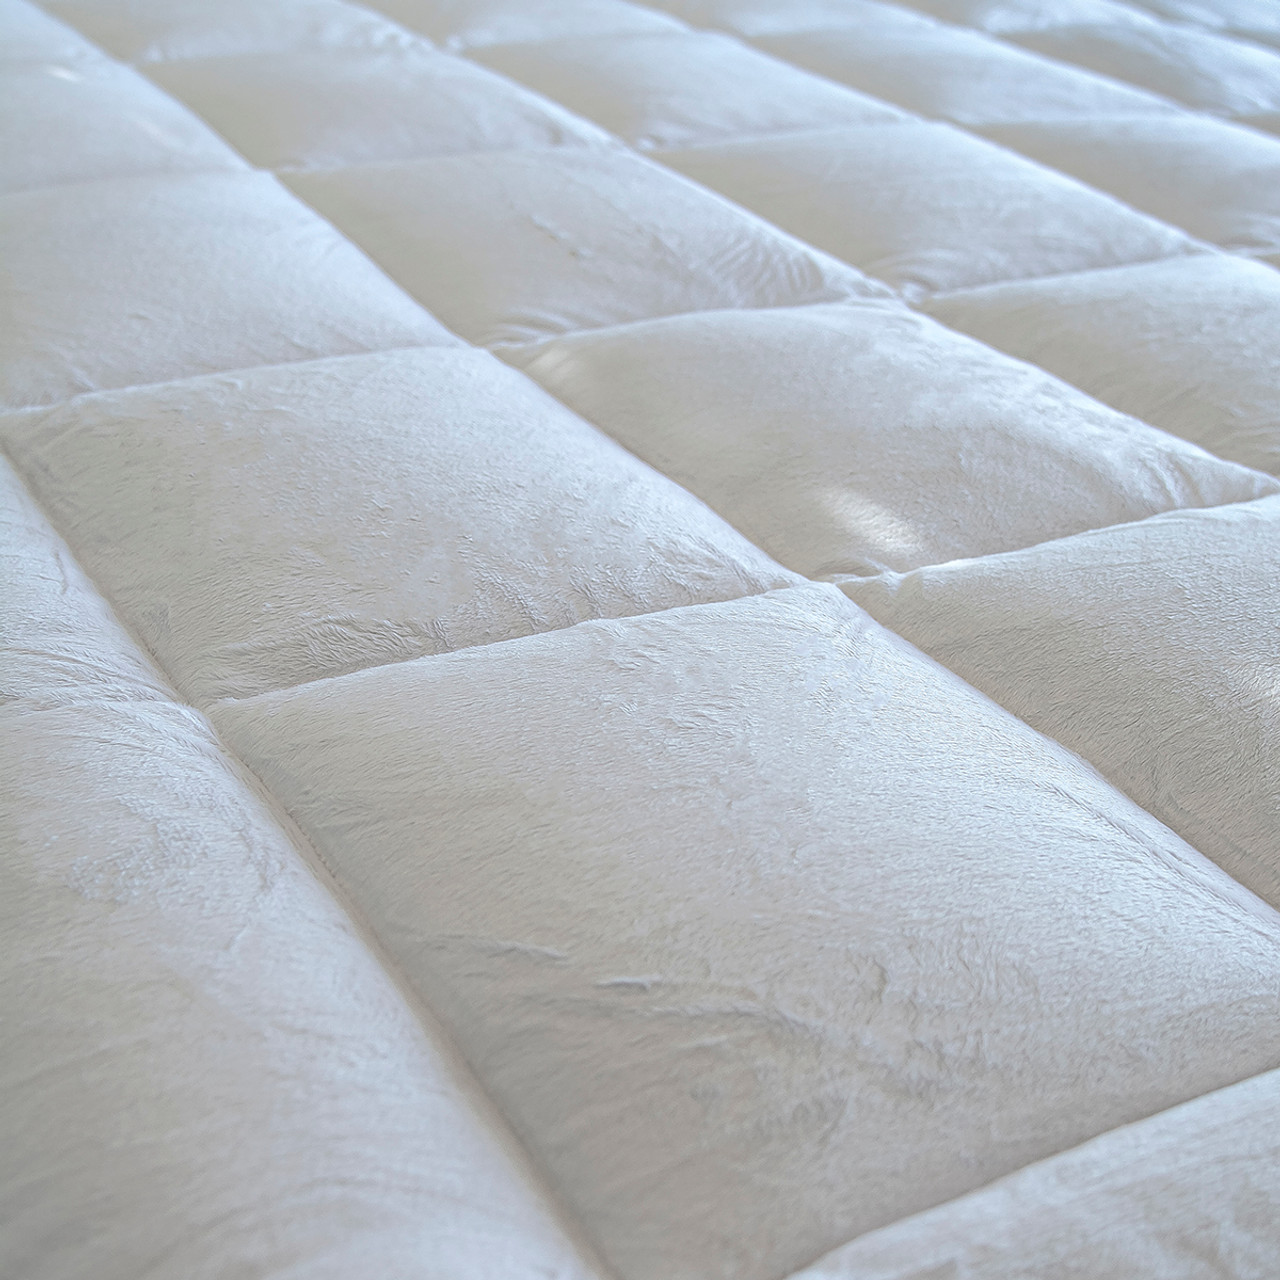 Luxurious Microplush Pillow Mattress Pad Topper product image